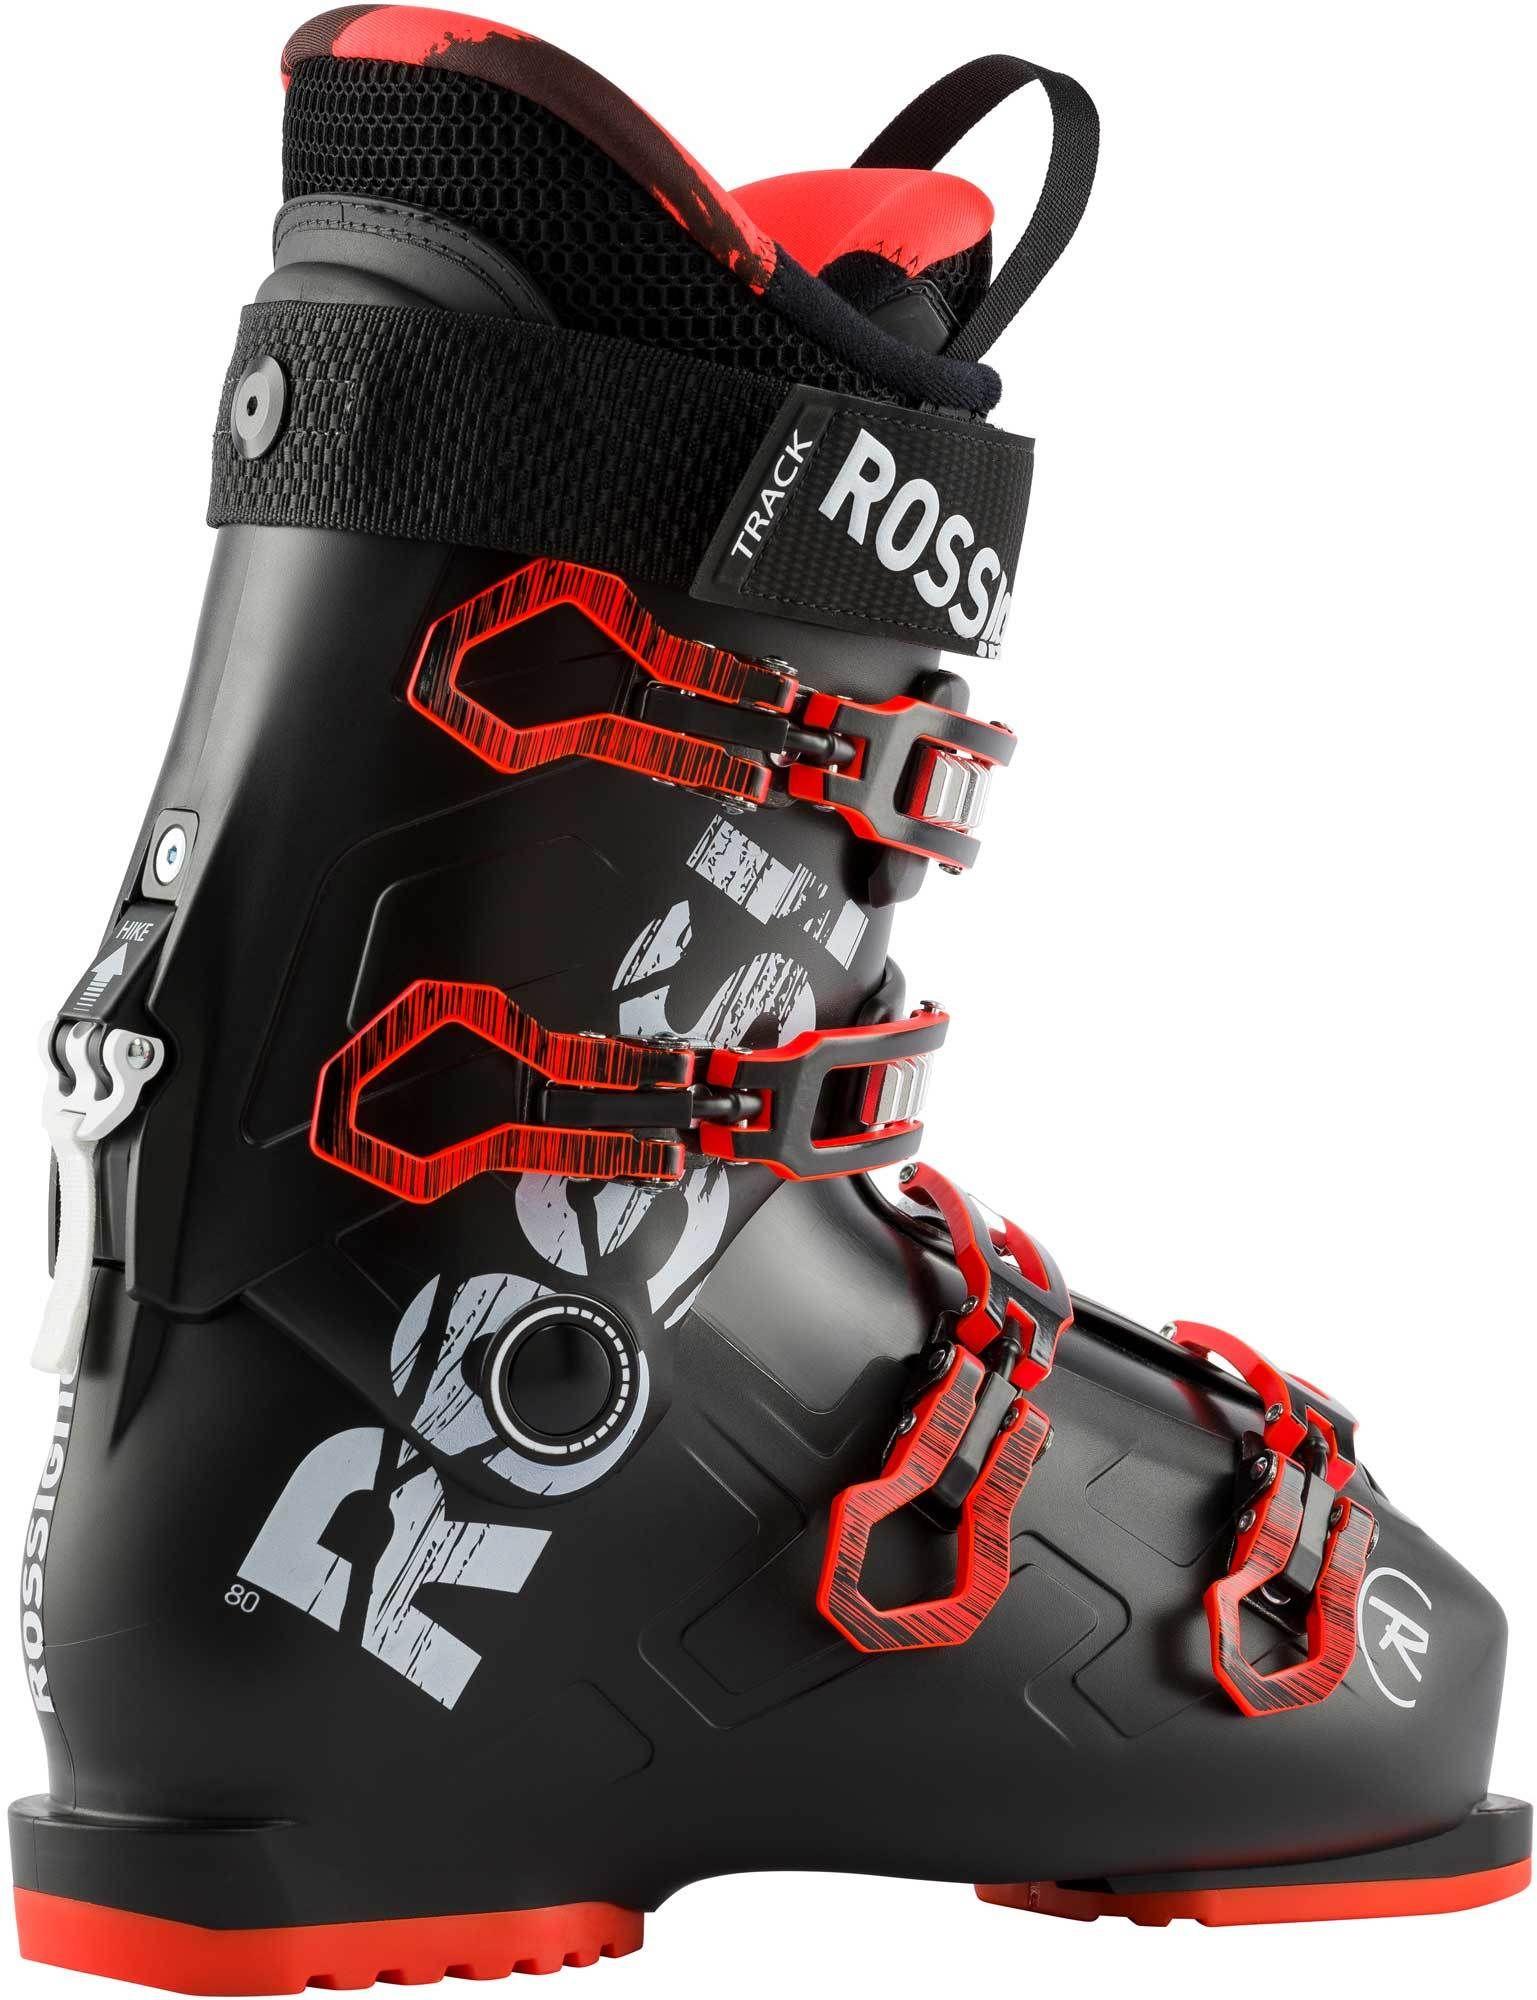 Rossignol Track 80 Ski Boots - 2020 